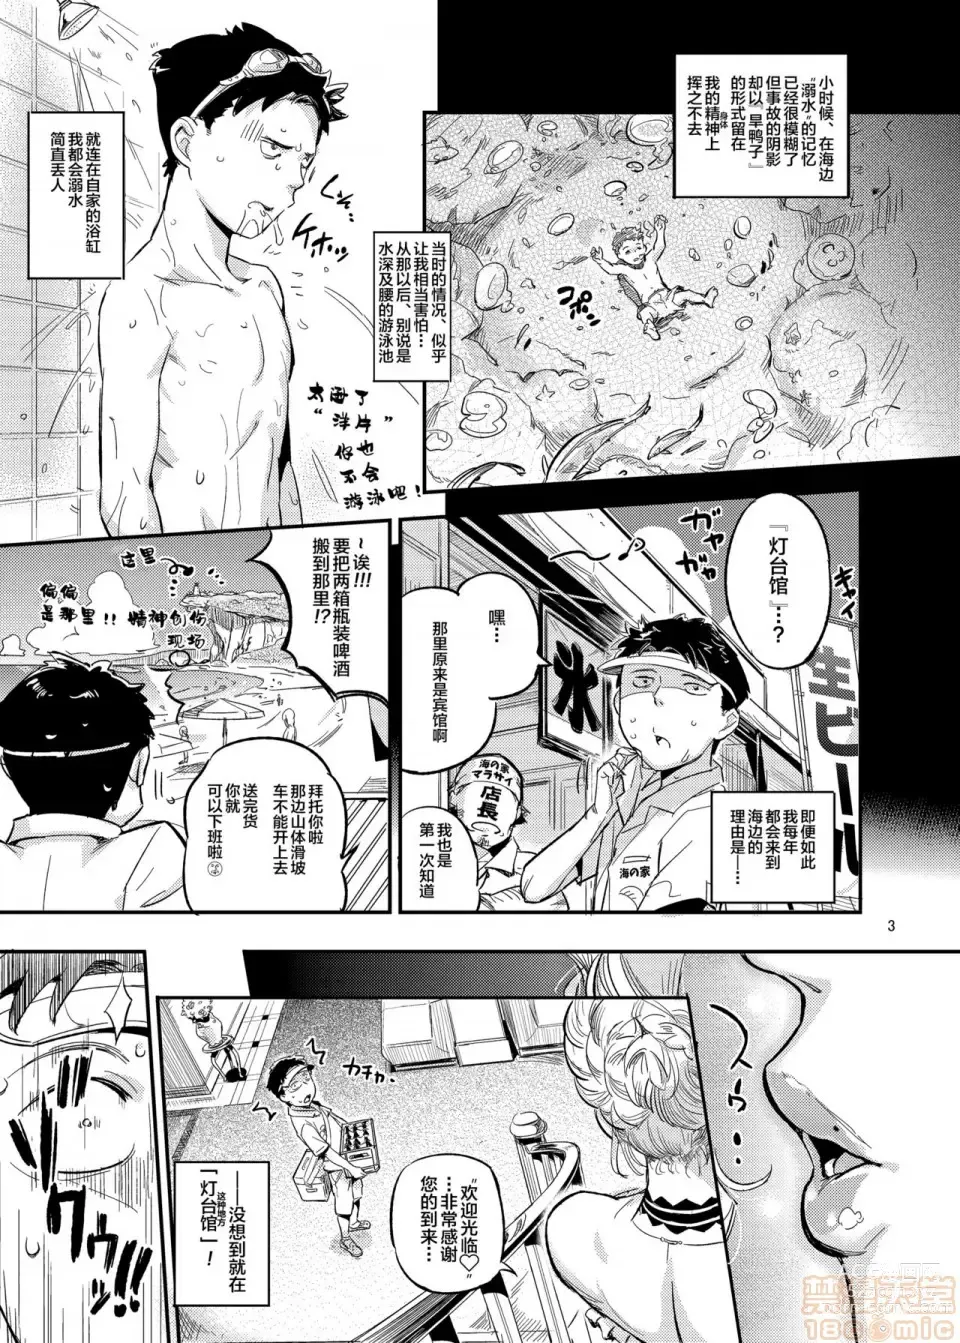 Page 5 of doujinshi 1